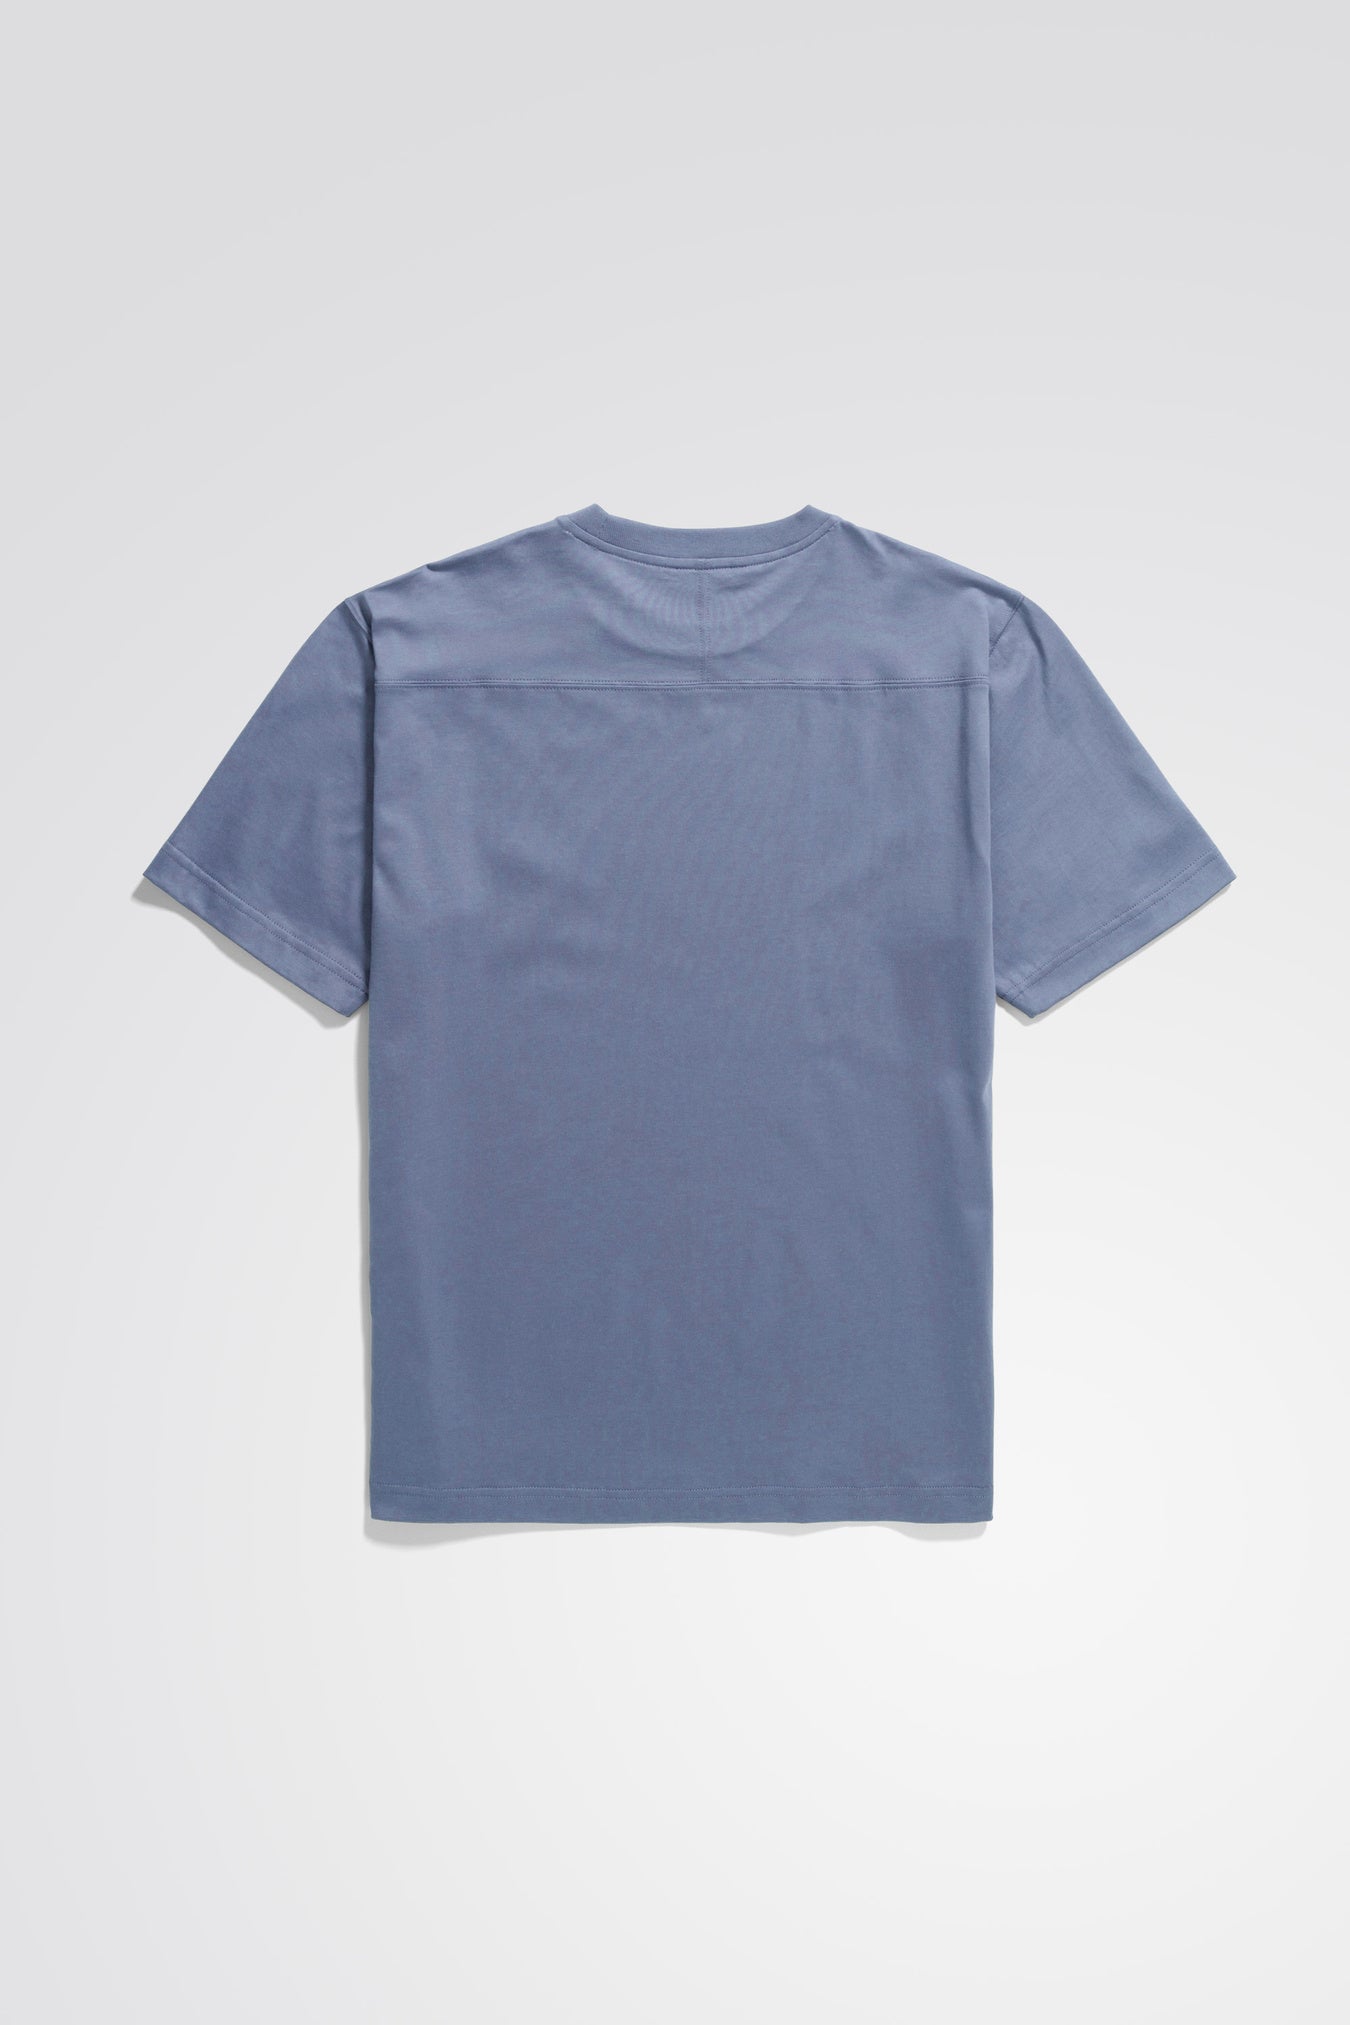 Johannes N Logo T-shirt - Fog Blue